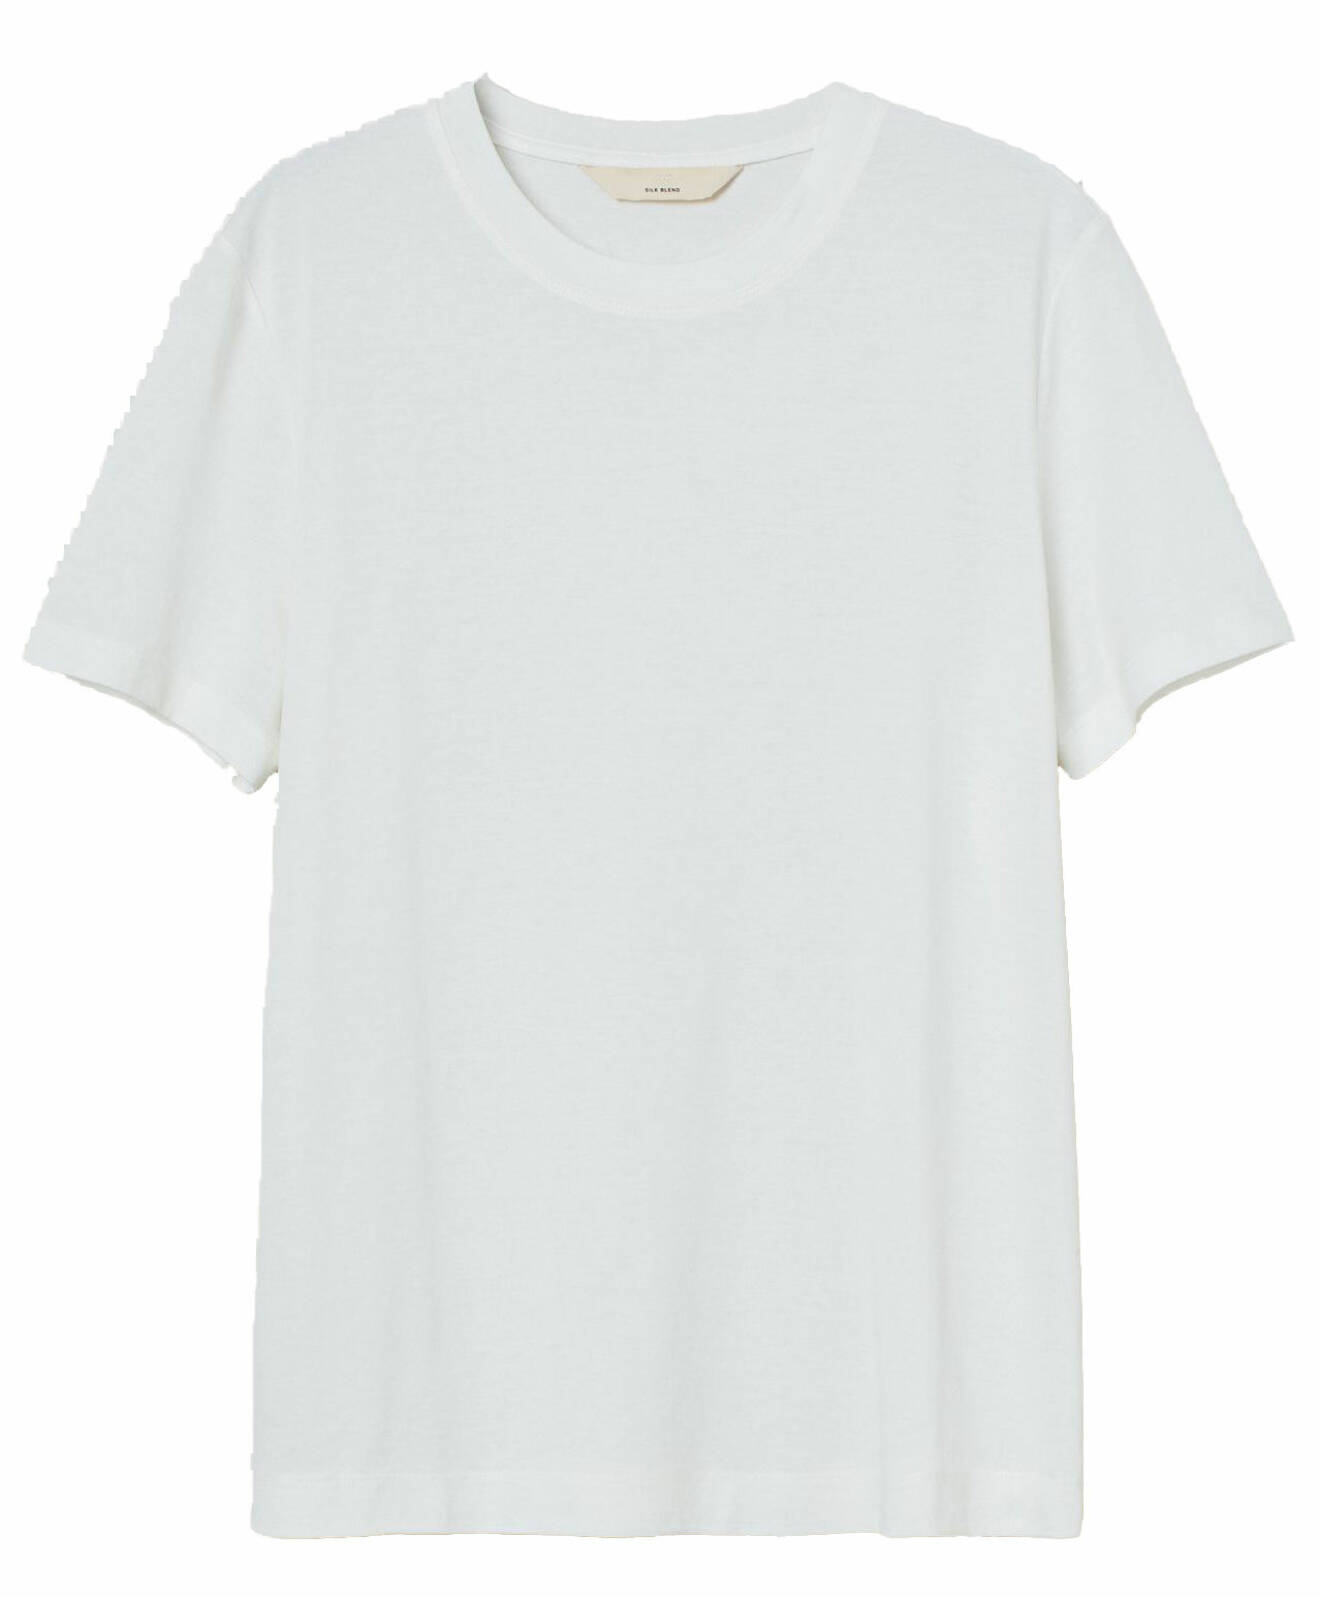 vit t-shirt från hm